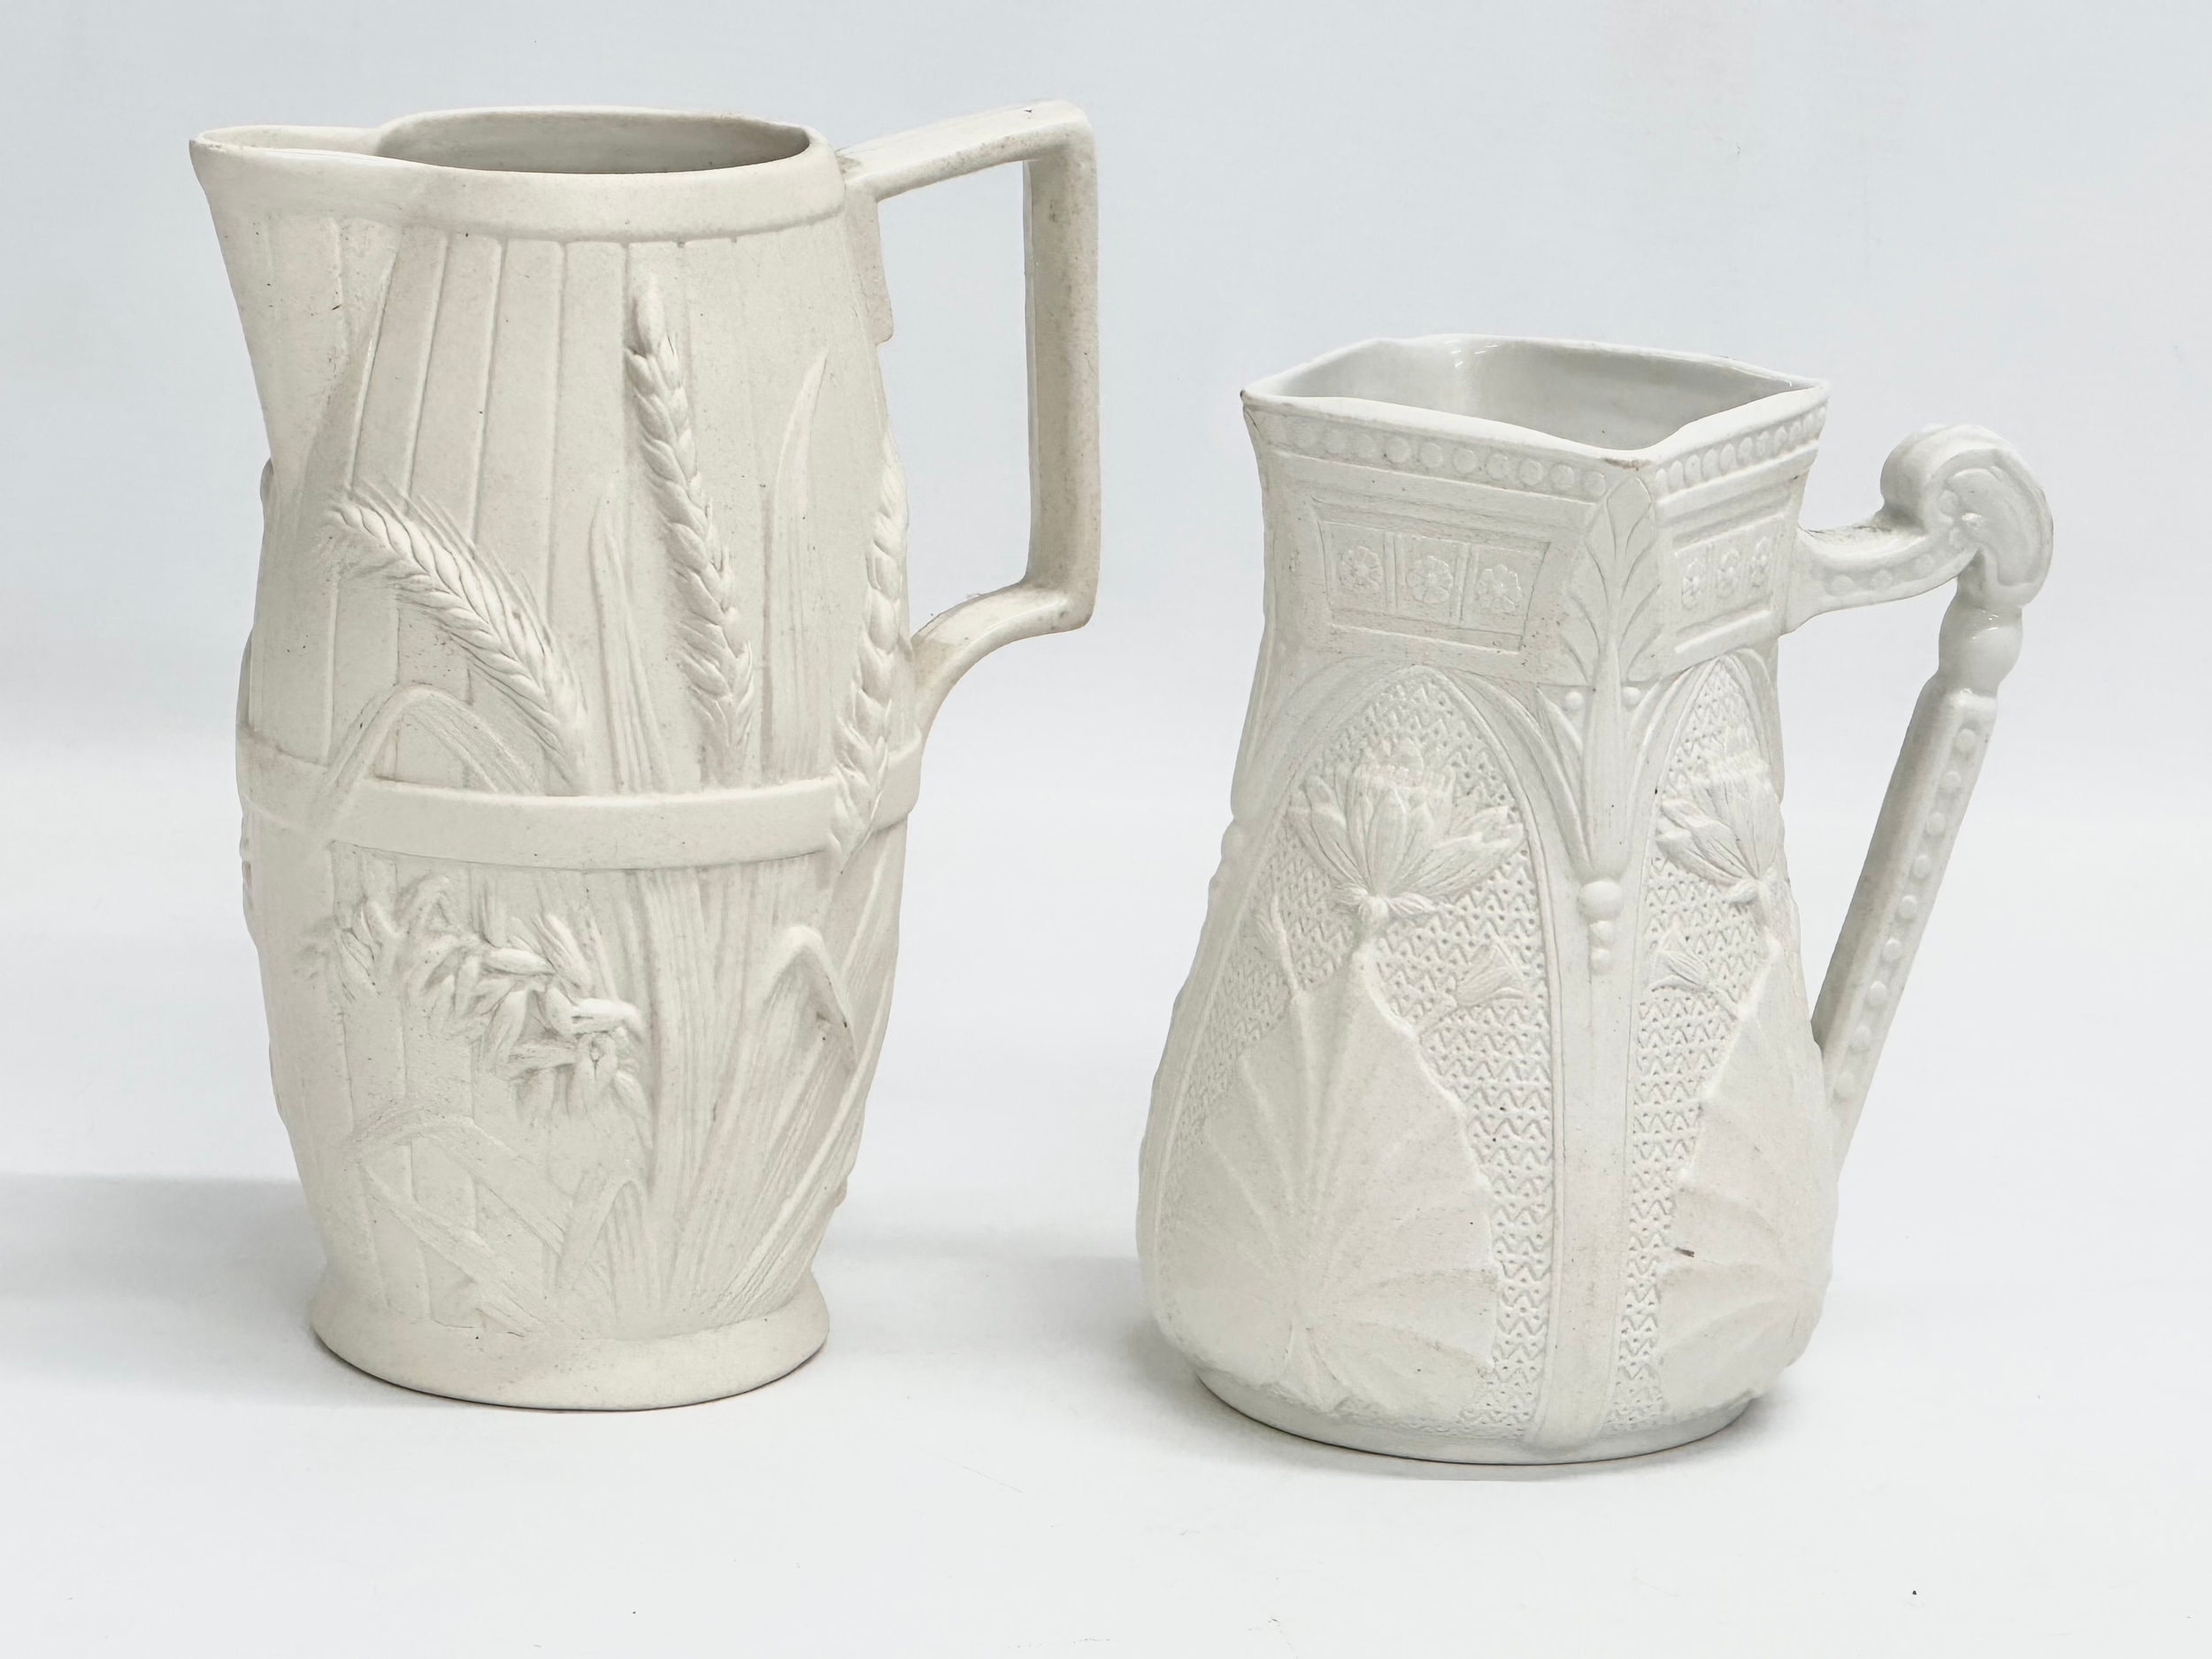 2 mid 19th century Copeland Parian Ware jugs. A Harvest Barrel jug 13x18cm.